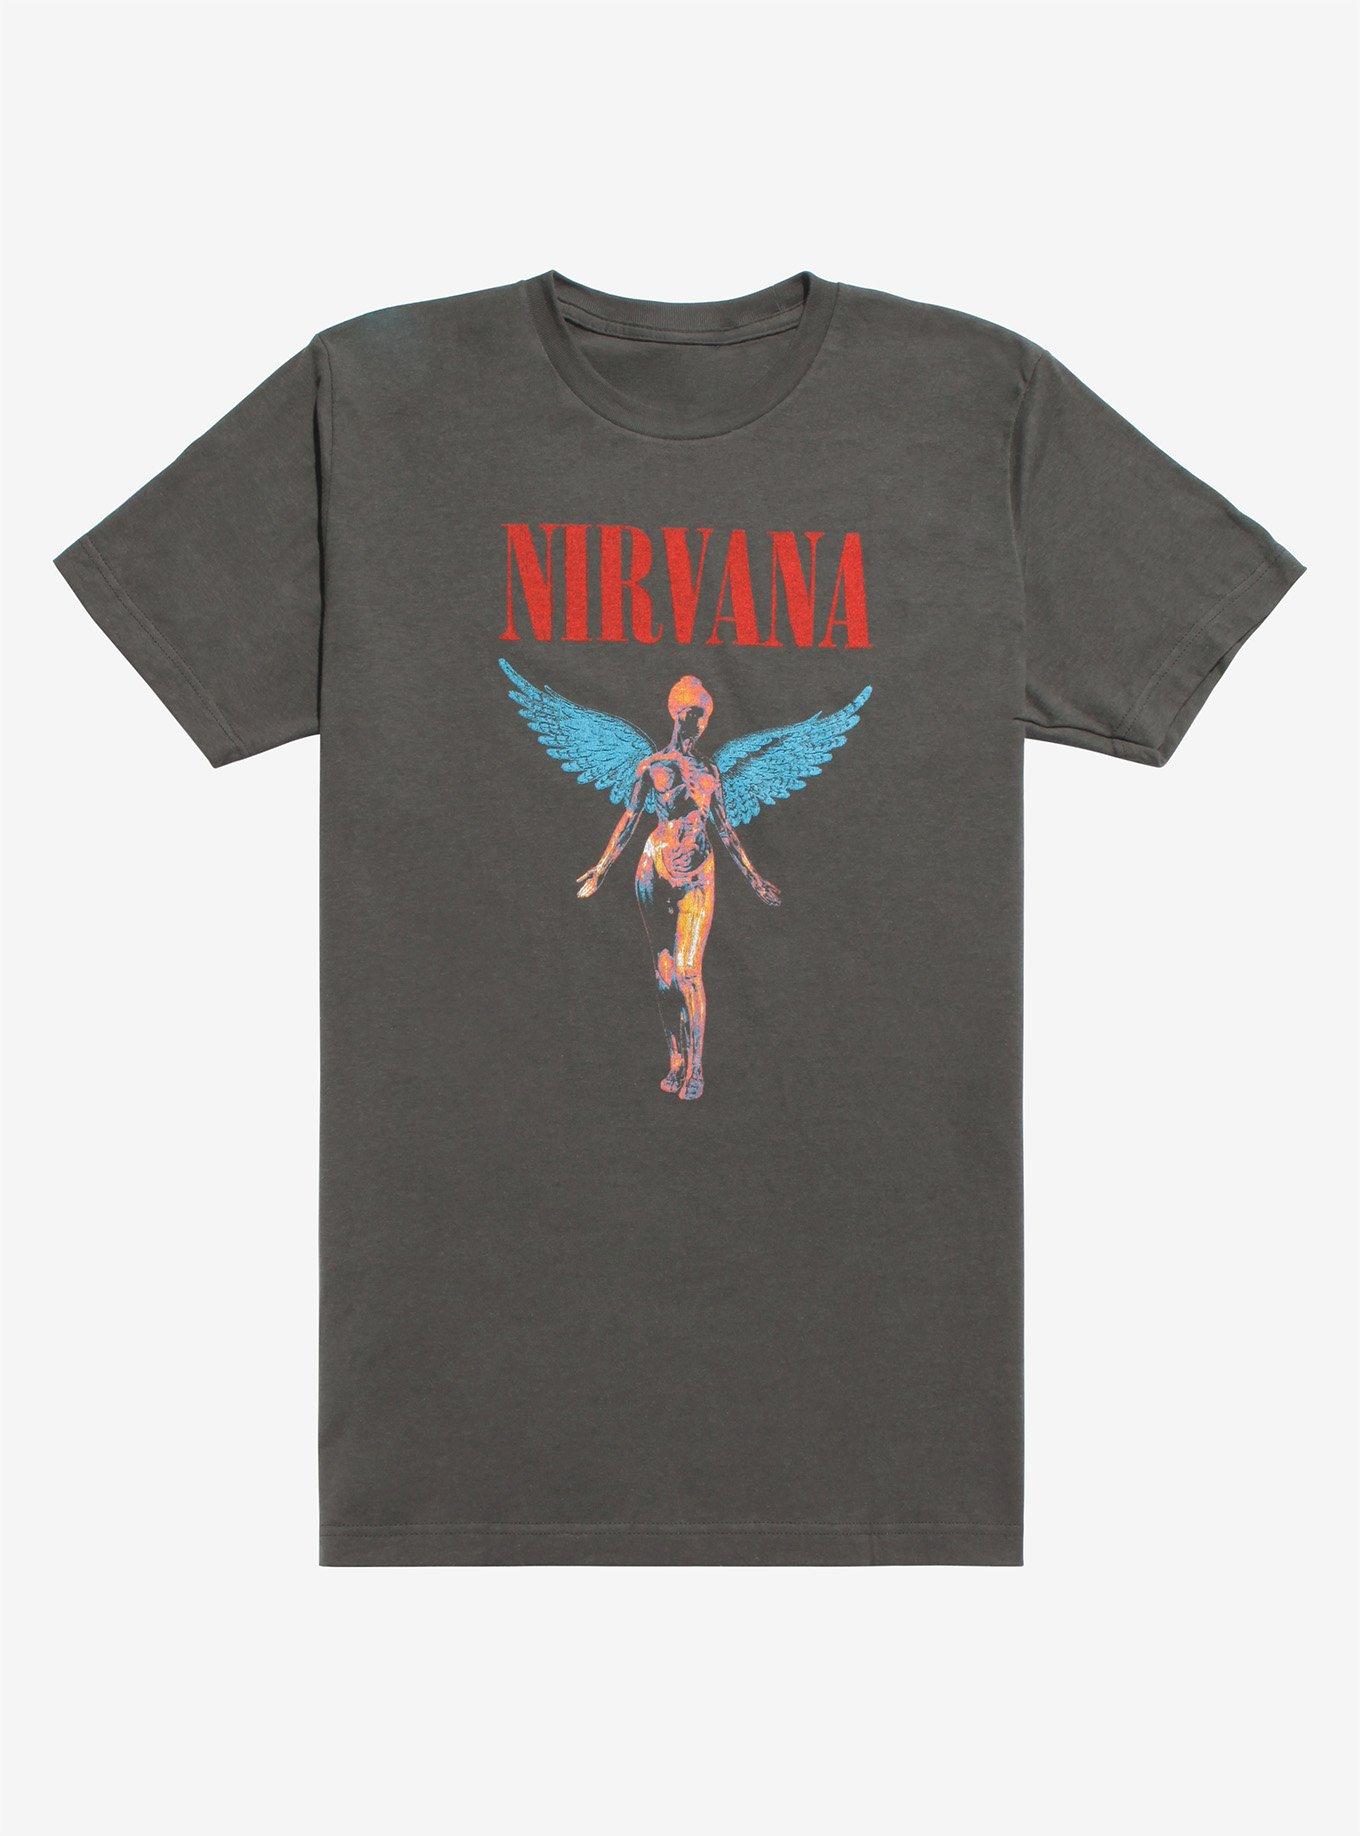 Nirvana In Utero T-Shirt, GREY, hi-res